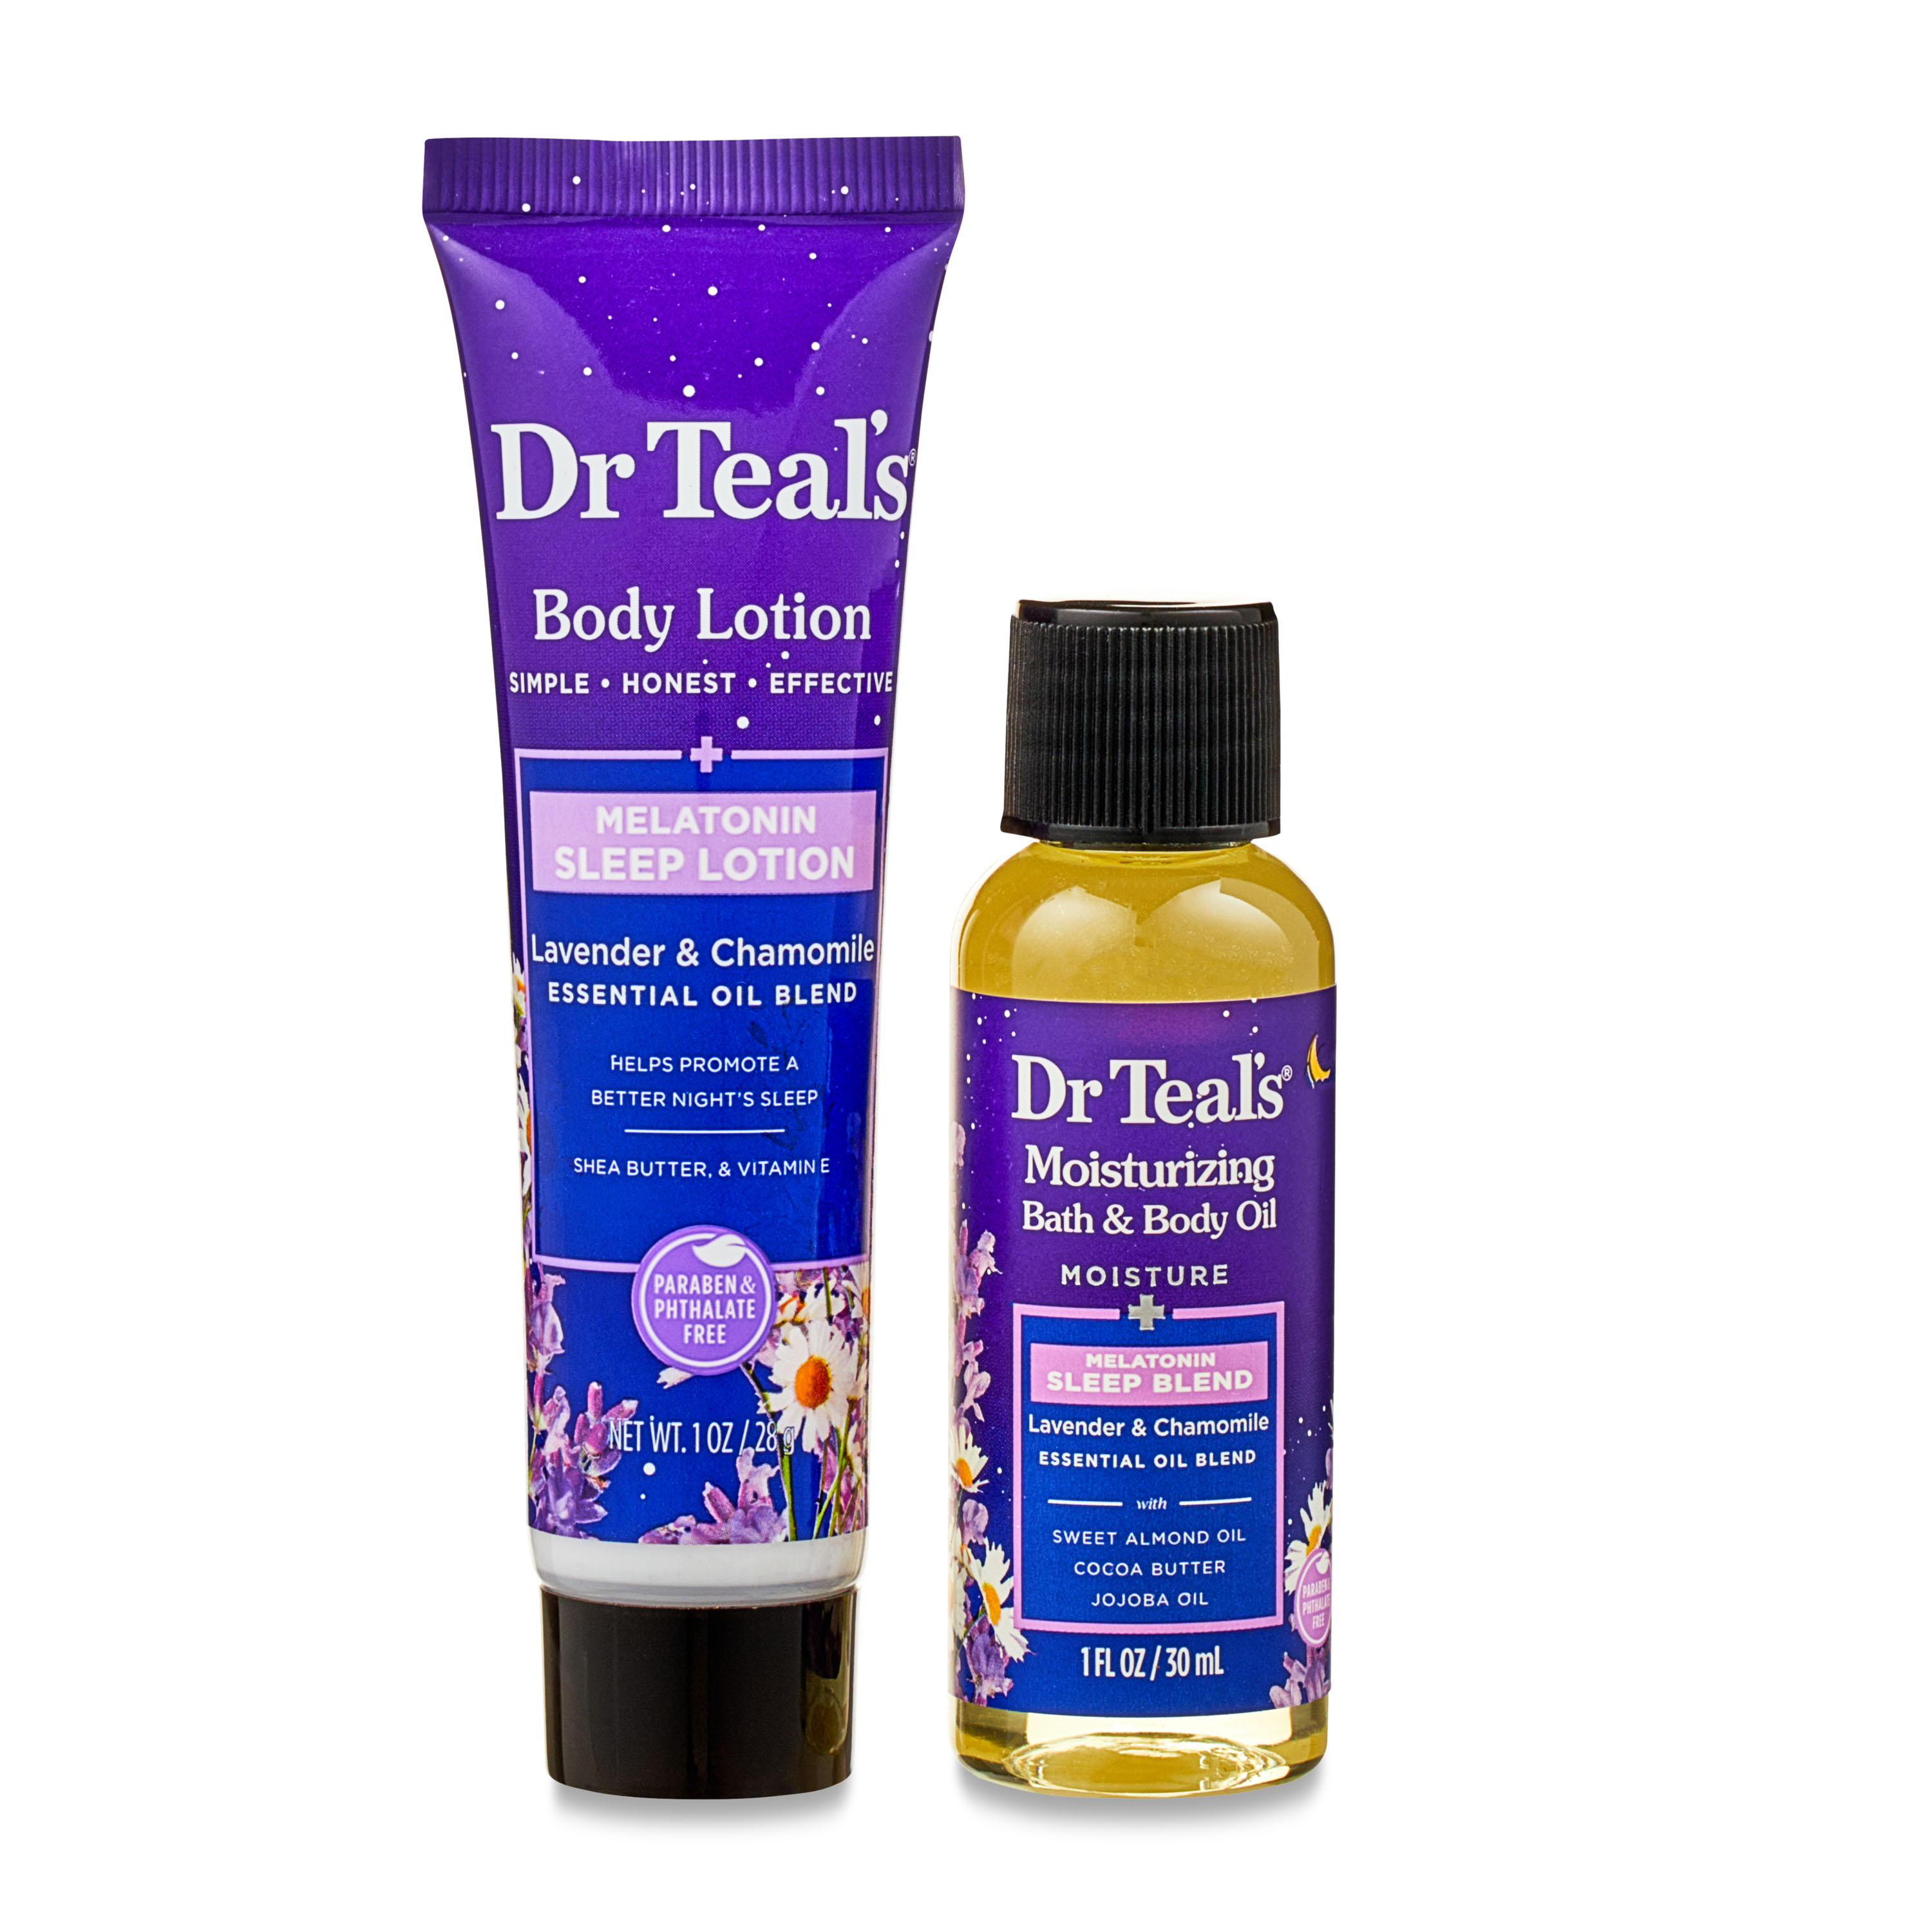 Dr Teal's Sleep Bath with Melatonin & Essential Oils 5-Piece Set - image 4 of 5